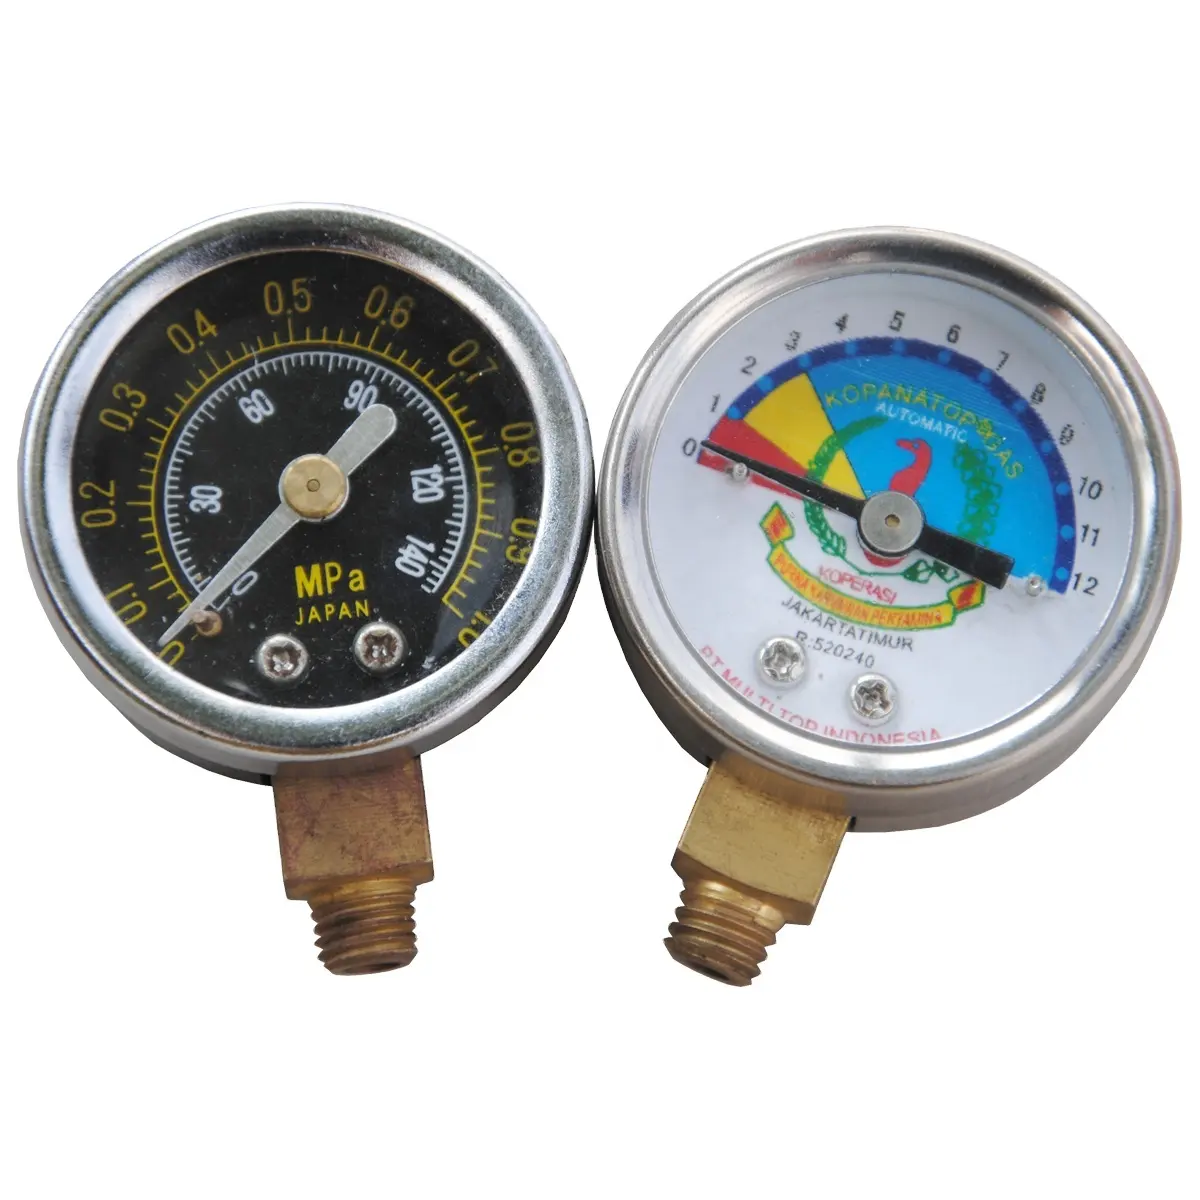 CNJG Propane LPG Pressure Gas Gauge LPG Gas Pressure Regulator Meter from Chinese Manufacturer